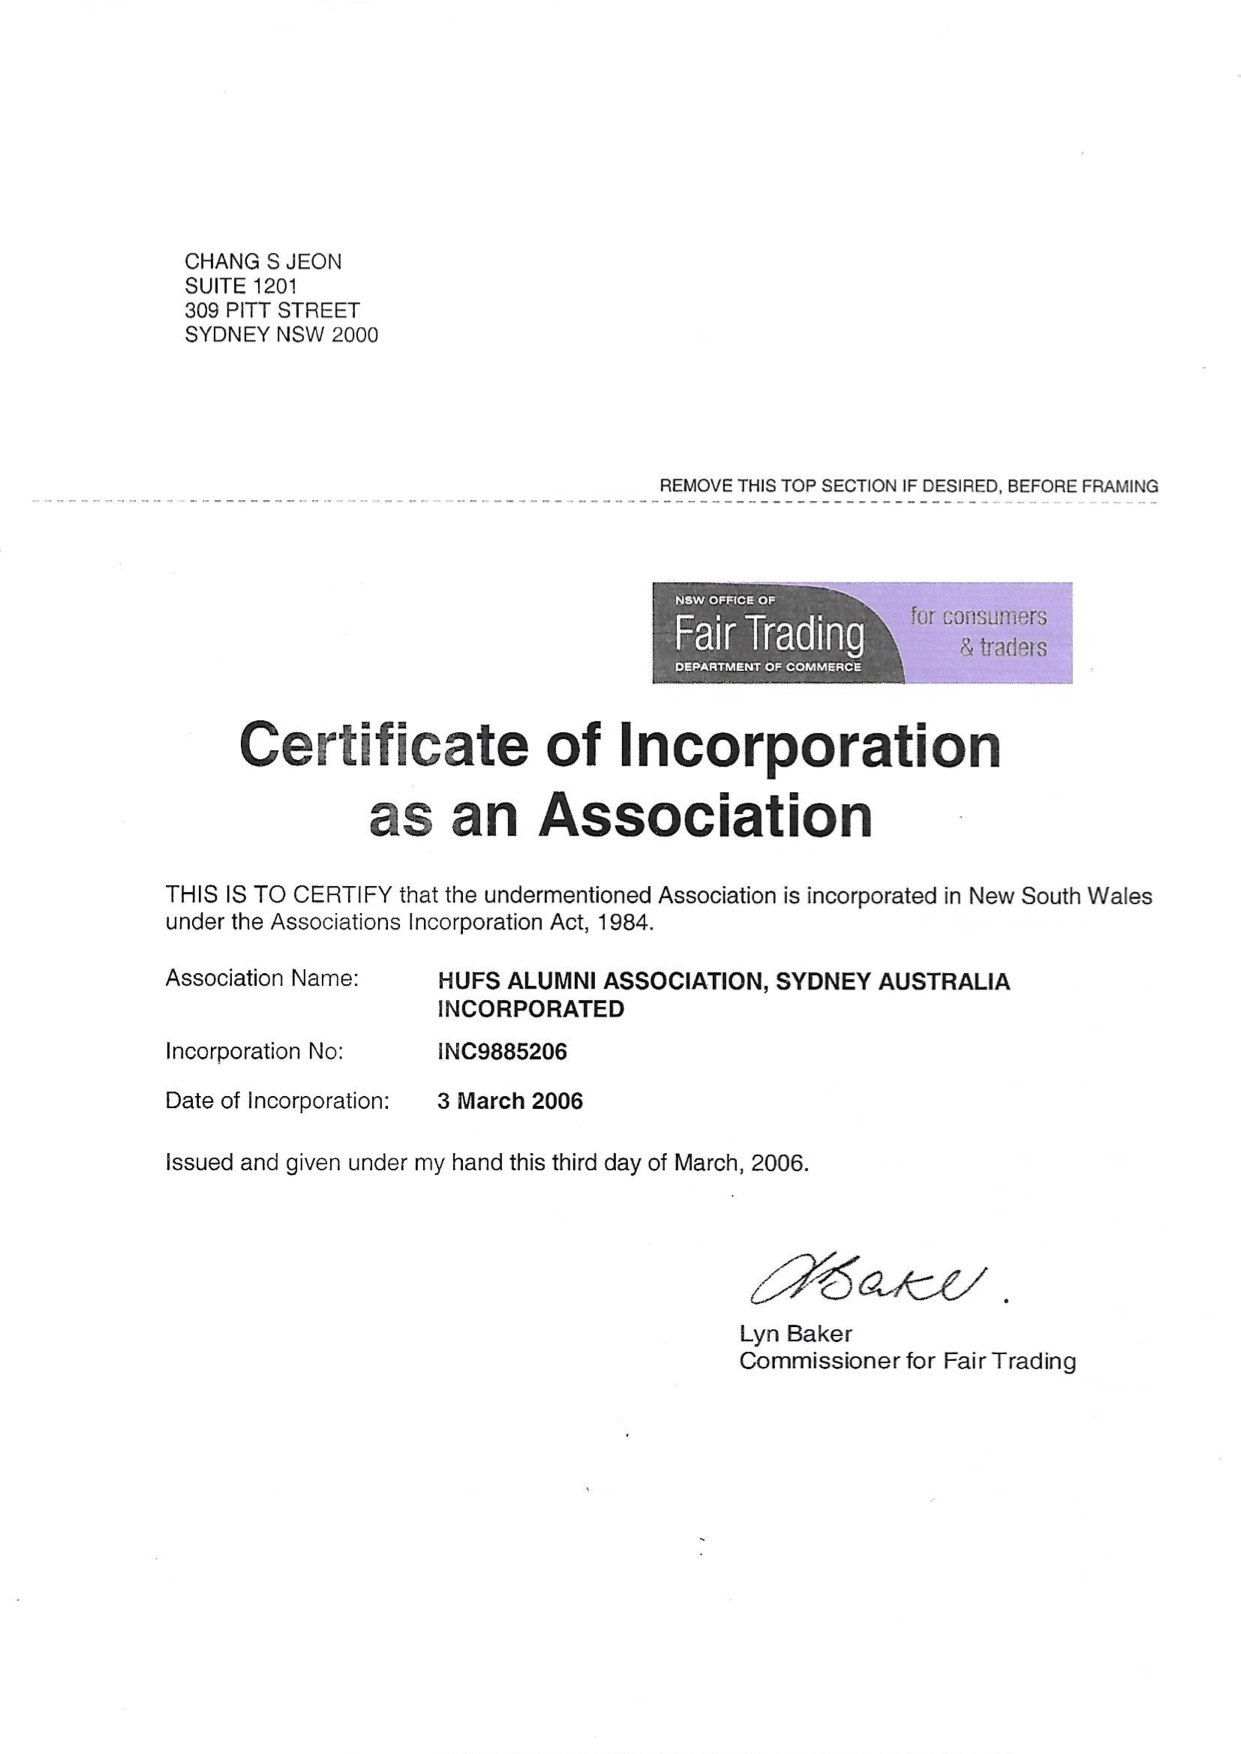 Certificate of Incorportation